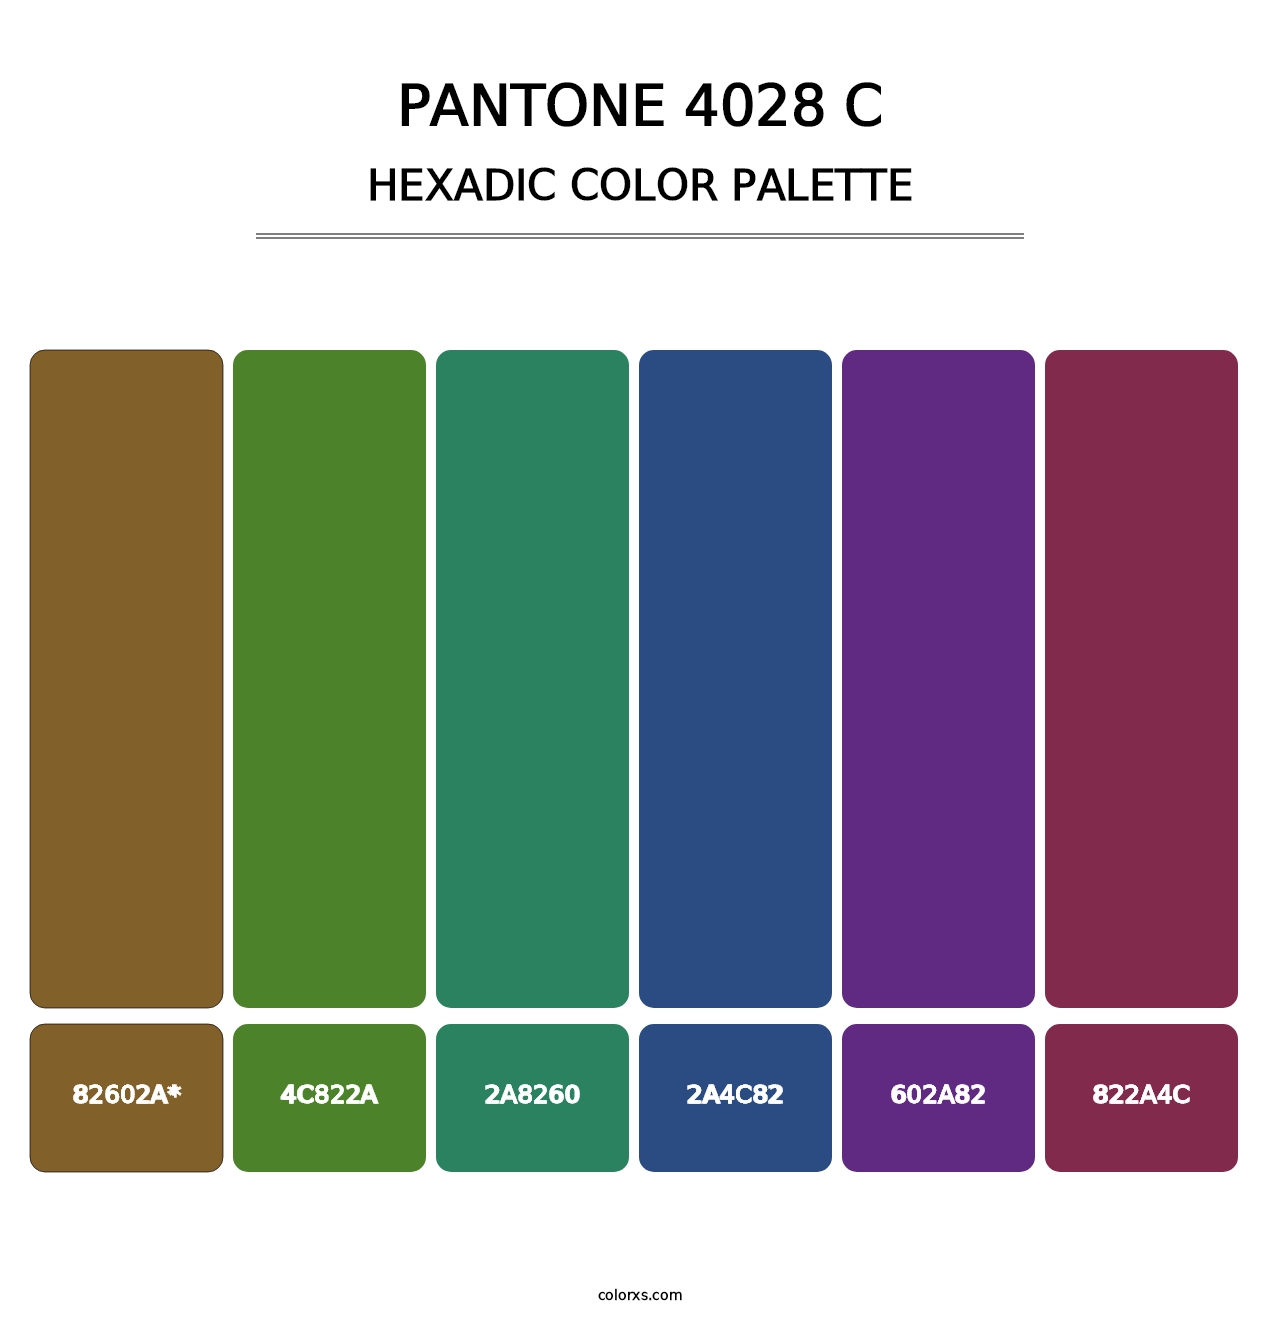 PANTONE 4028 C - Hexadic Color Palette